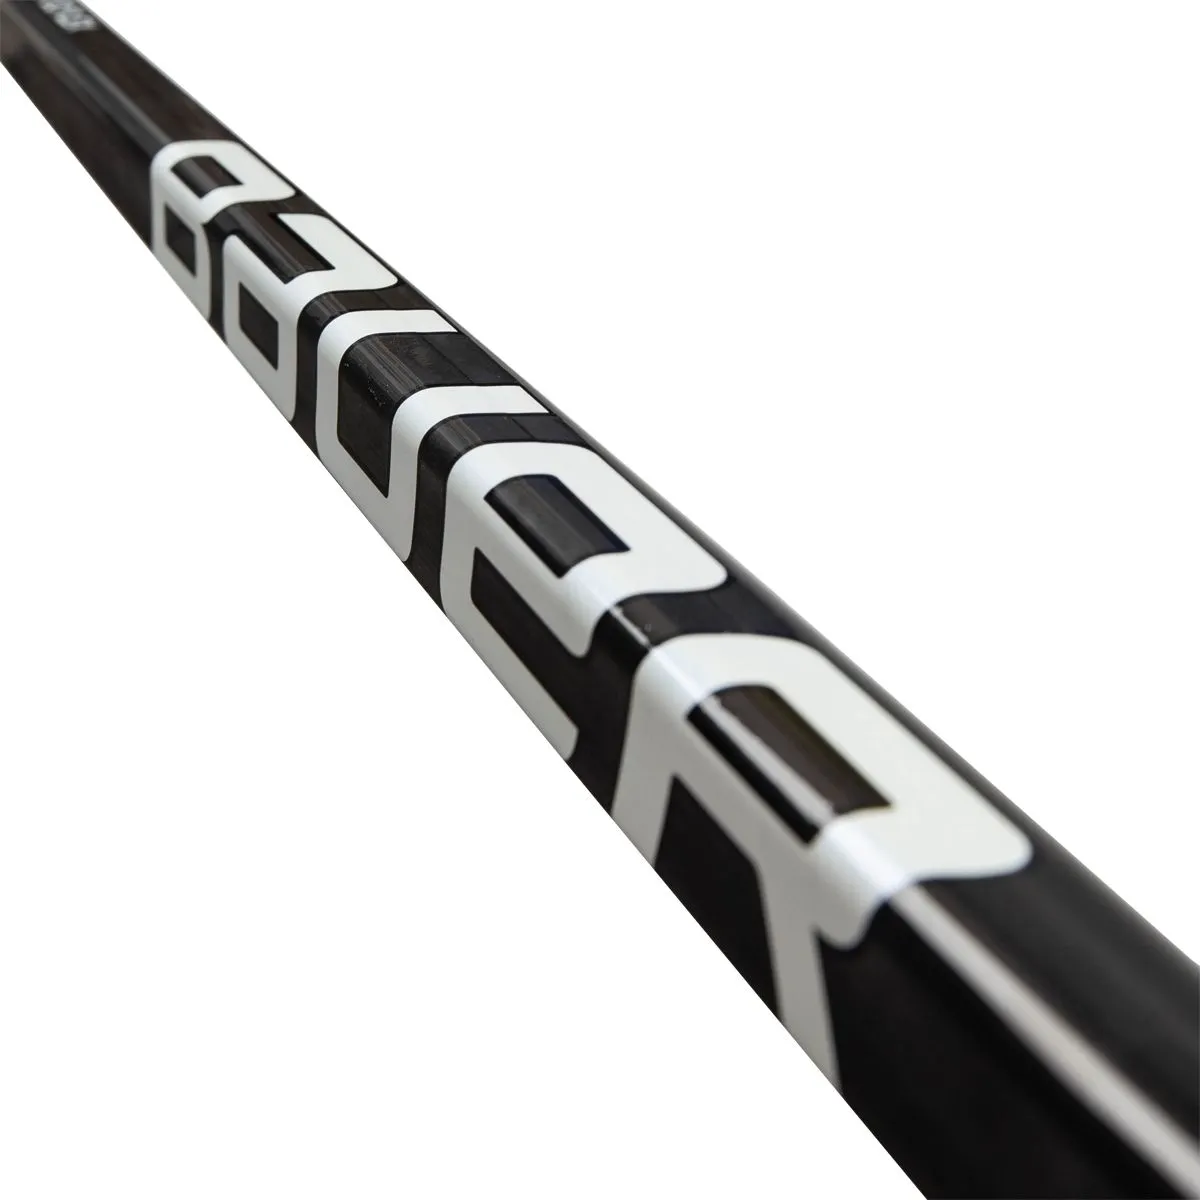 Bauer Nexus Performance Youth Hockey Stick - 30 Flex